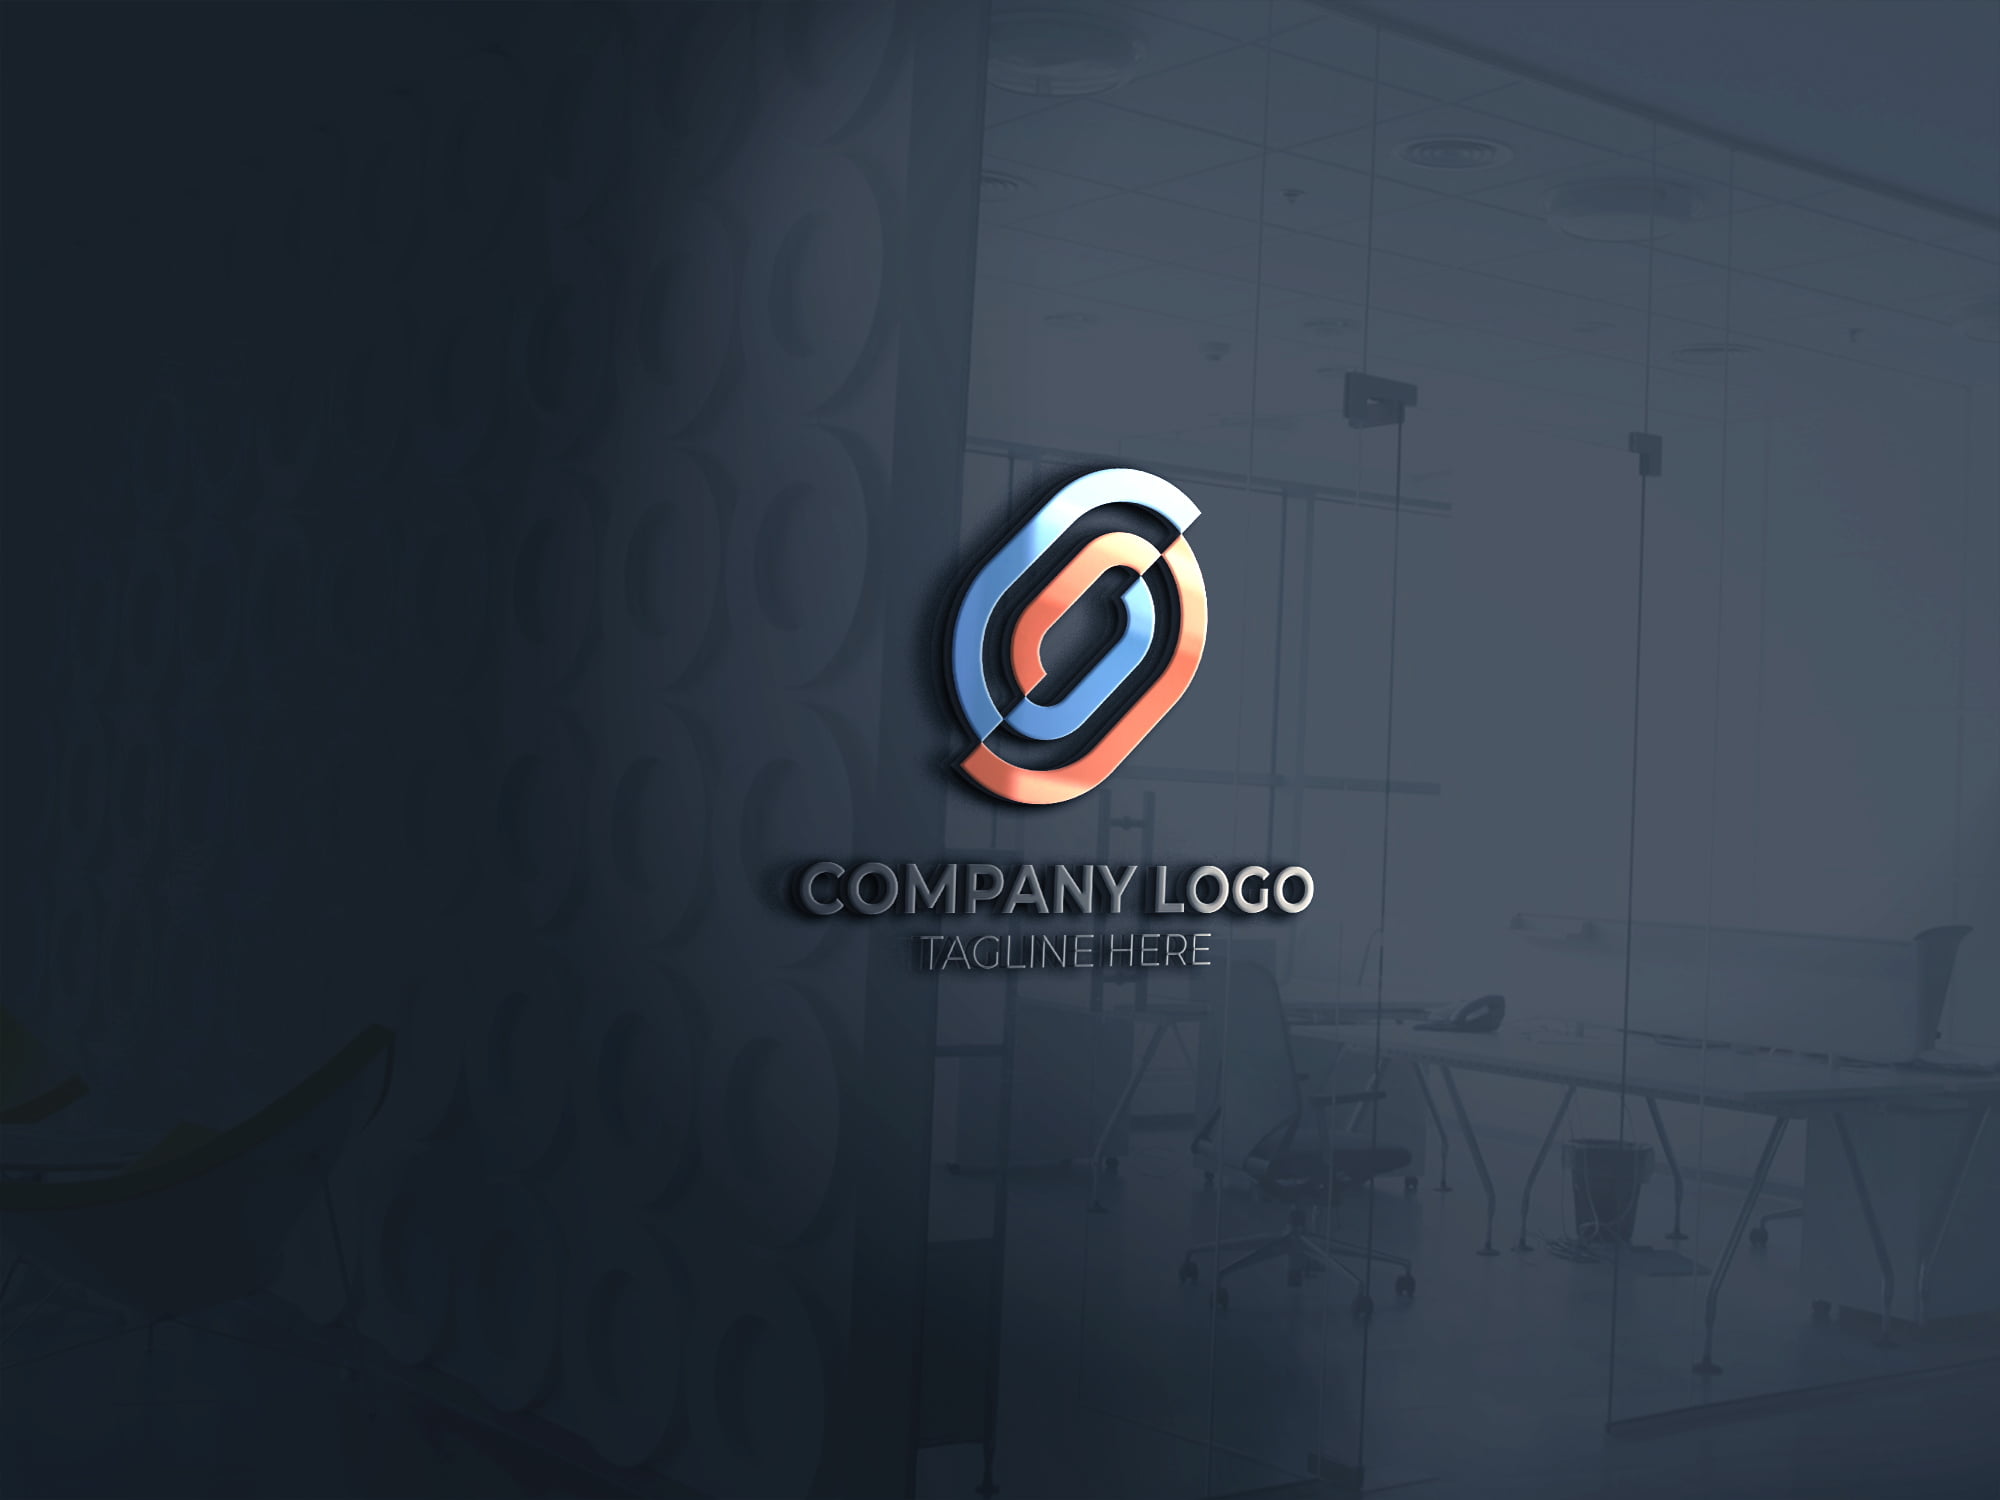 3d company logo presentation